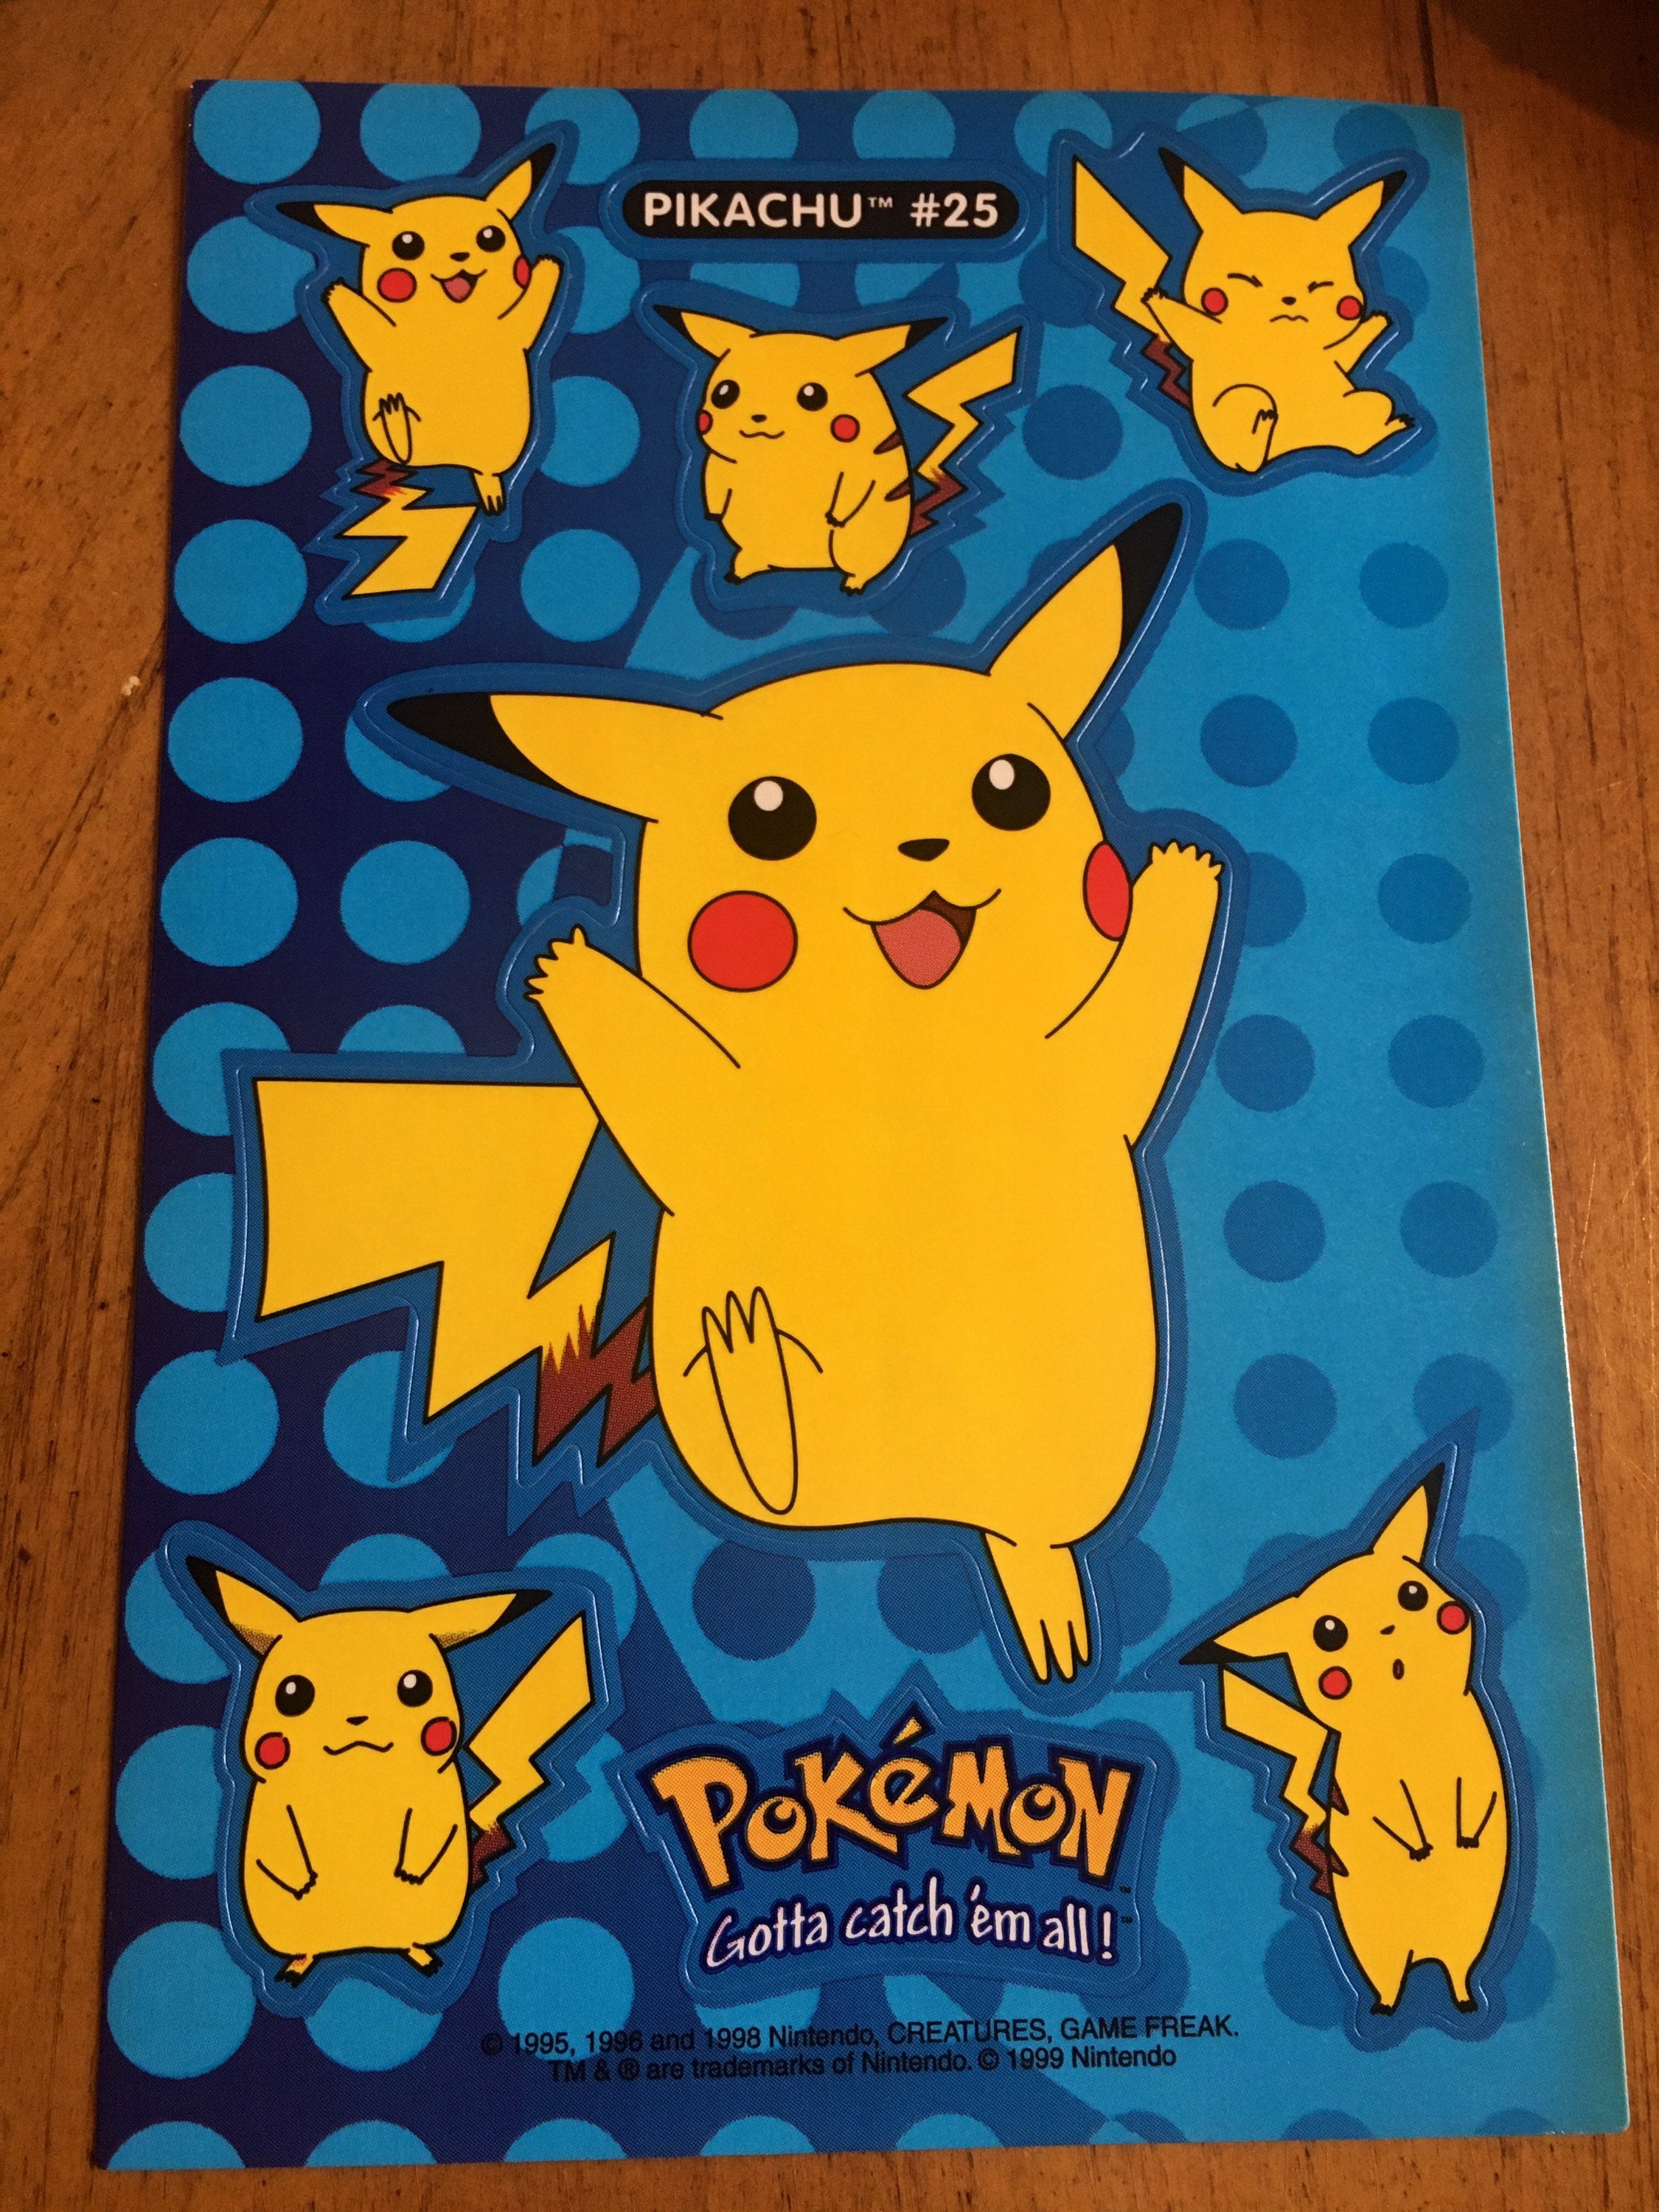 VTG 90s Pokemon Mini Sticker Book & Autocollants Sticker packs Pikachu  Nintendo